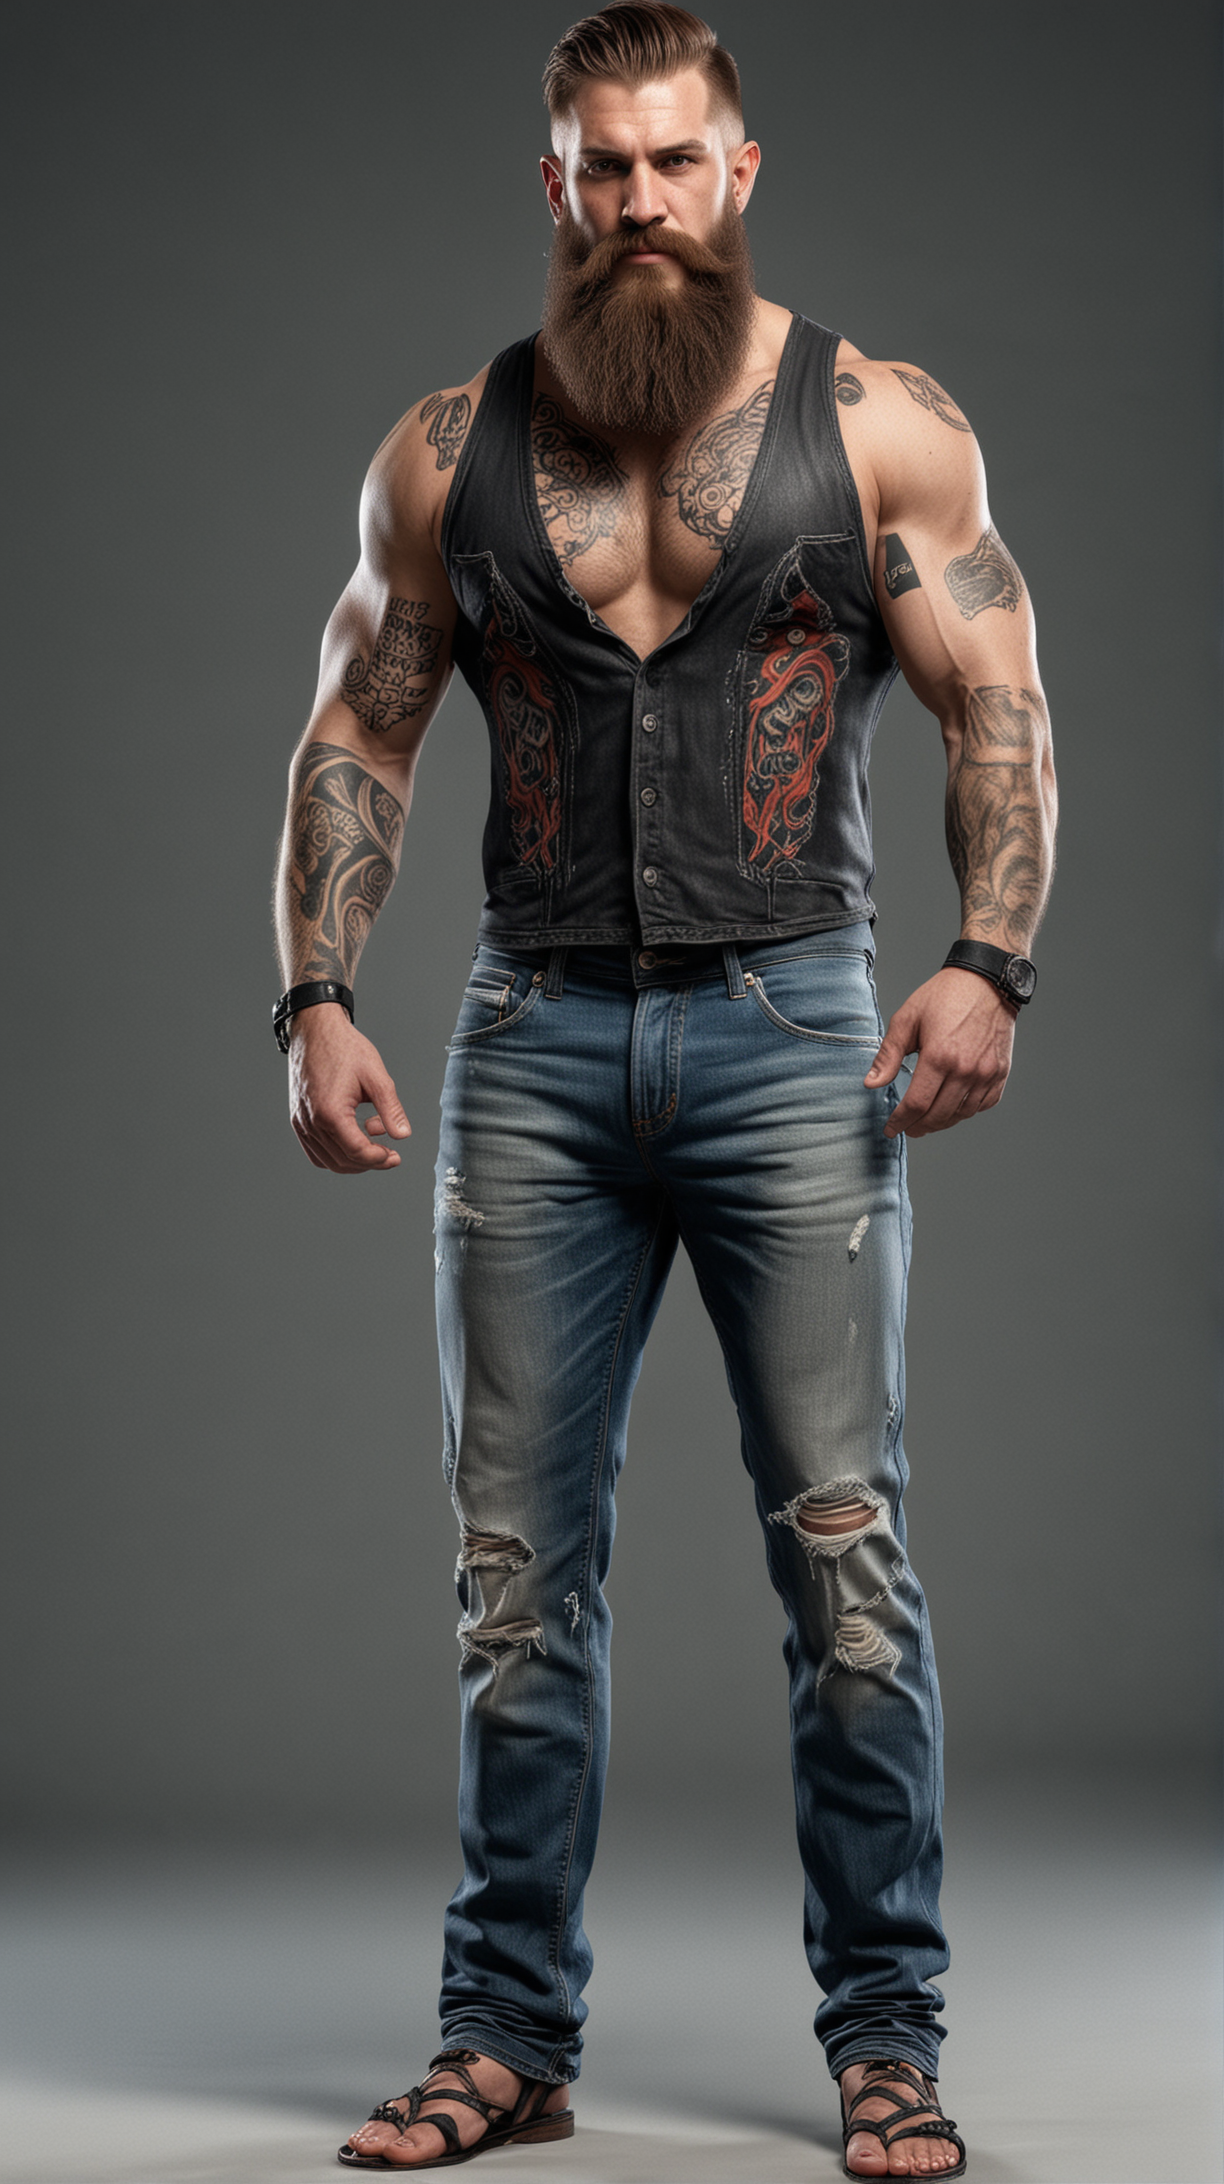 Wrestler
long beard
burns on face
tank top
jeans
towering behemoth
Broad shoulders
Muscular
Scars
Tattoos
Ugly
disfigured face
Bare feet
!include full body in render!